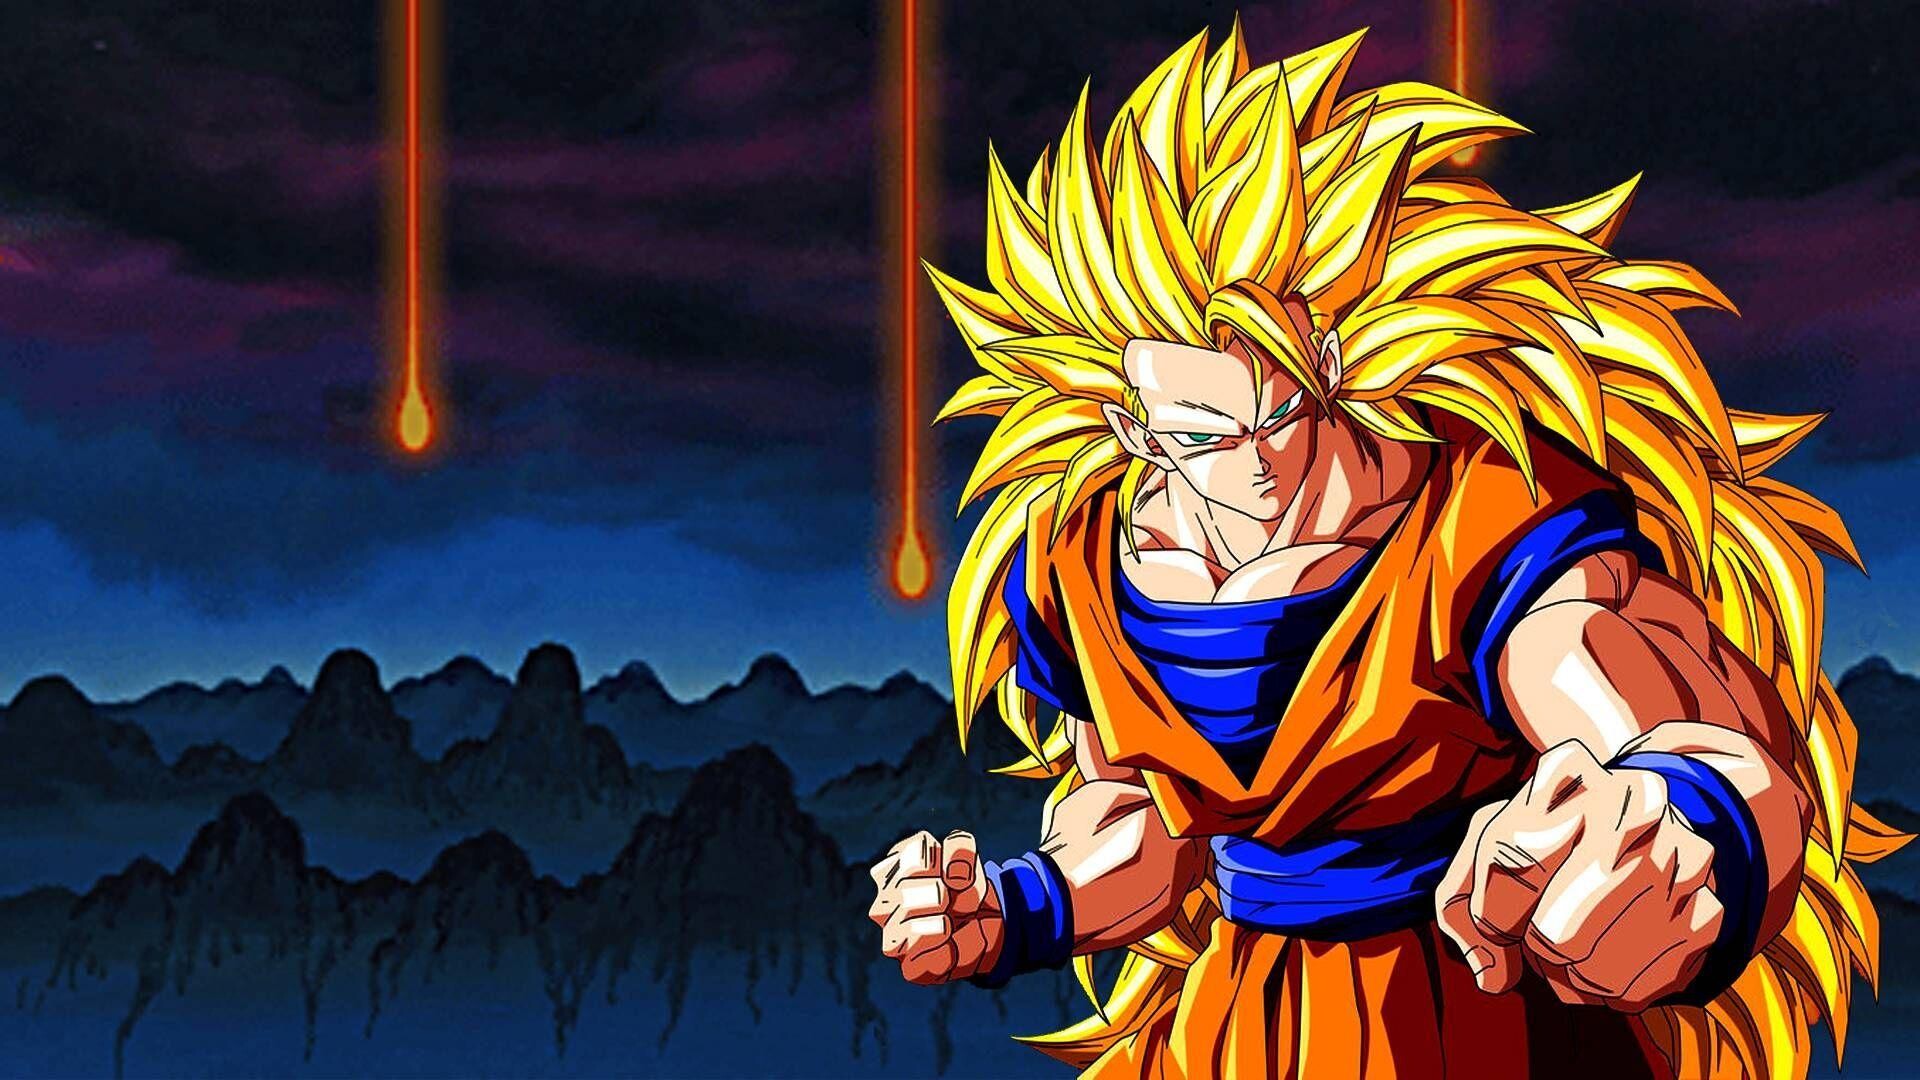 Goku Super Saiyan: Dragon Ball Z, Fictional character possessing superhuman strength, Advanced transformation. 1920x1080 Full HD Wallpaper.